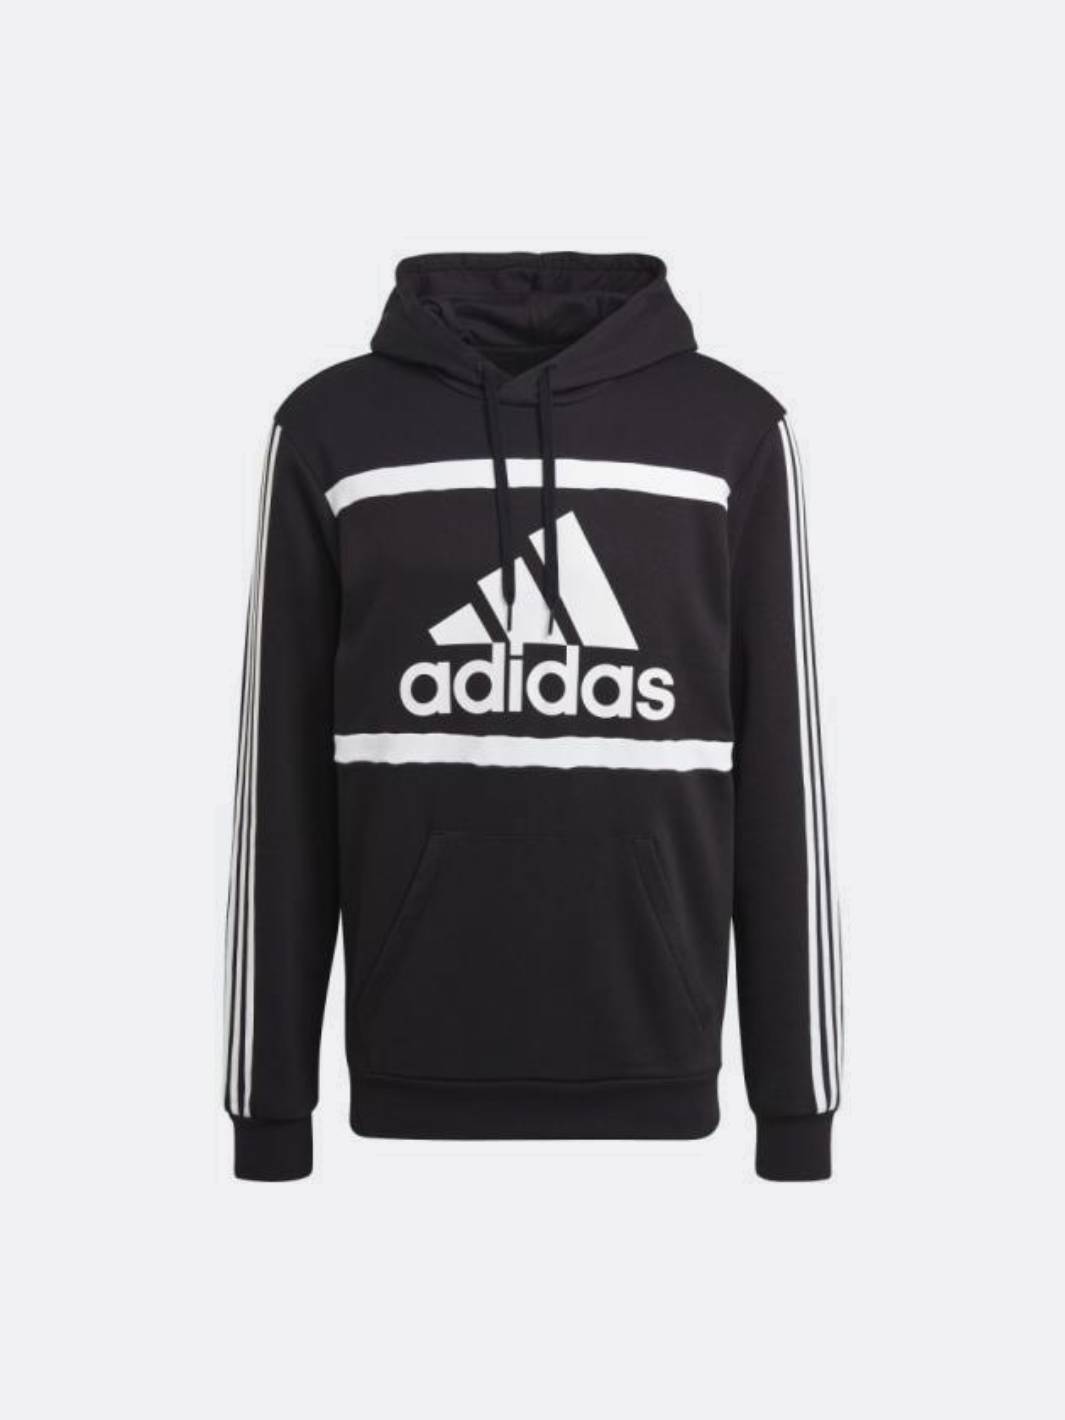 adidas Crew Sweatshirt Set - Black | adidas Canada